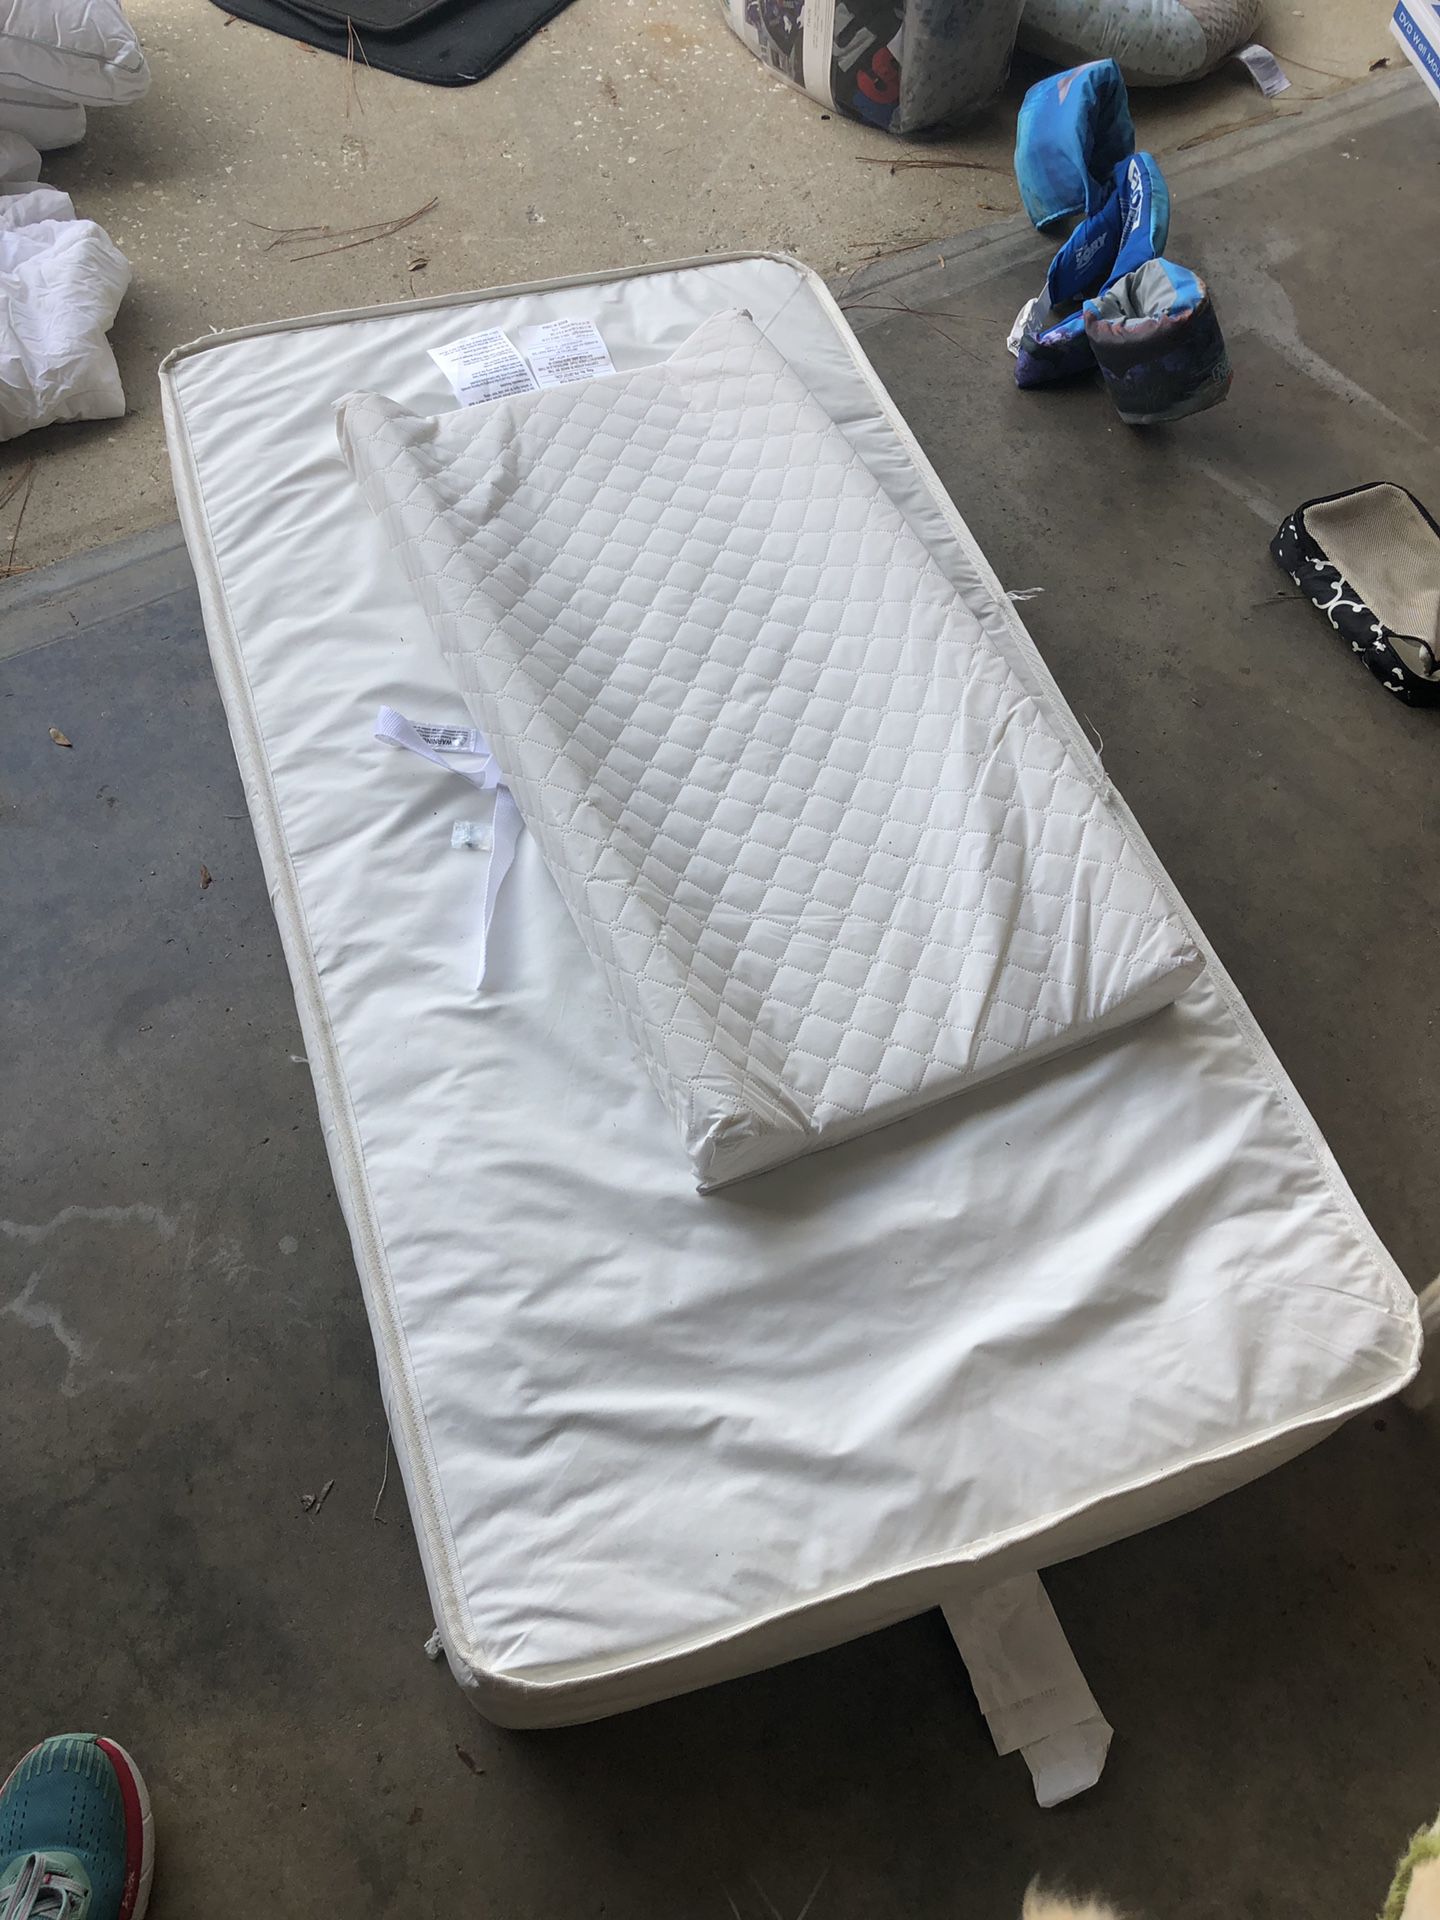 Crib mattress and changing table mattress